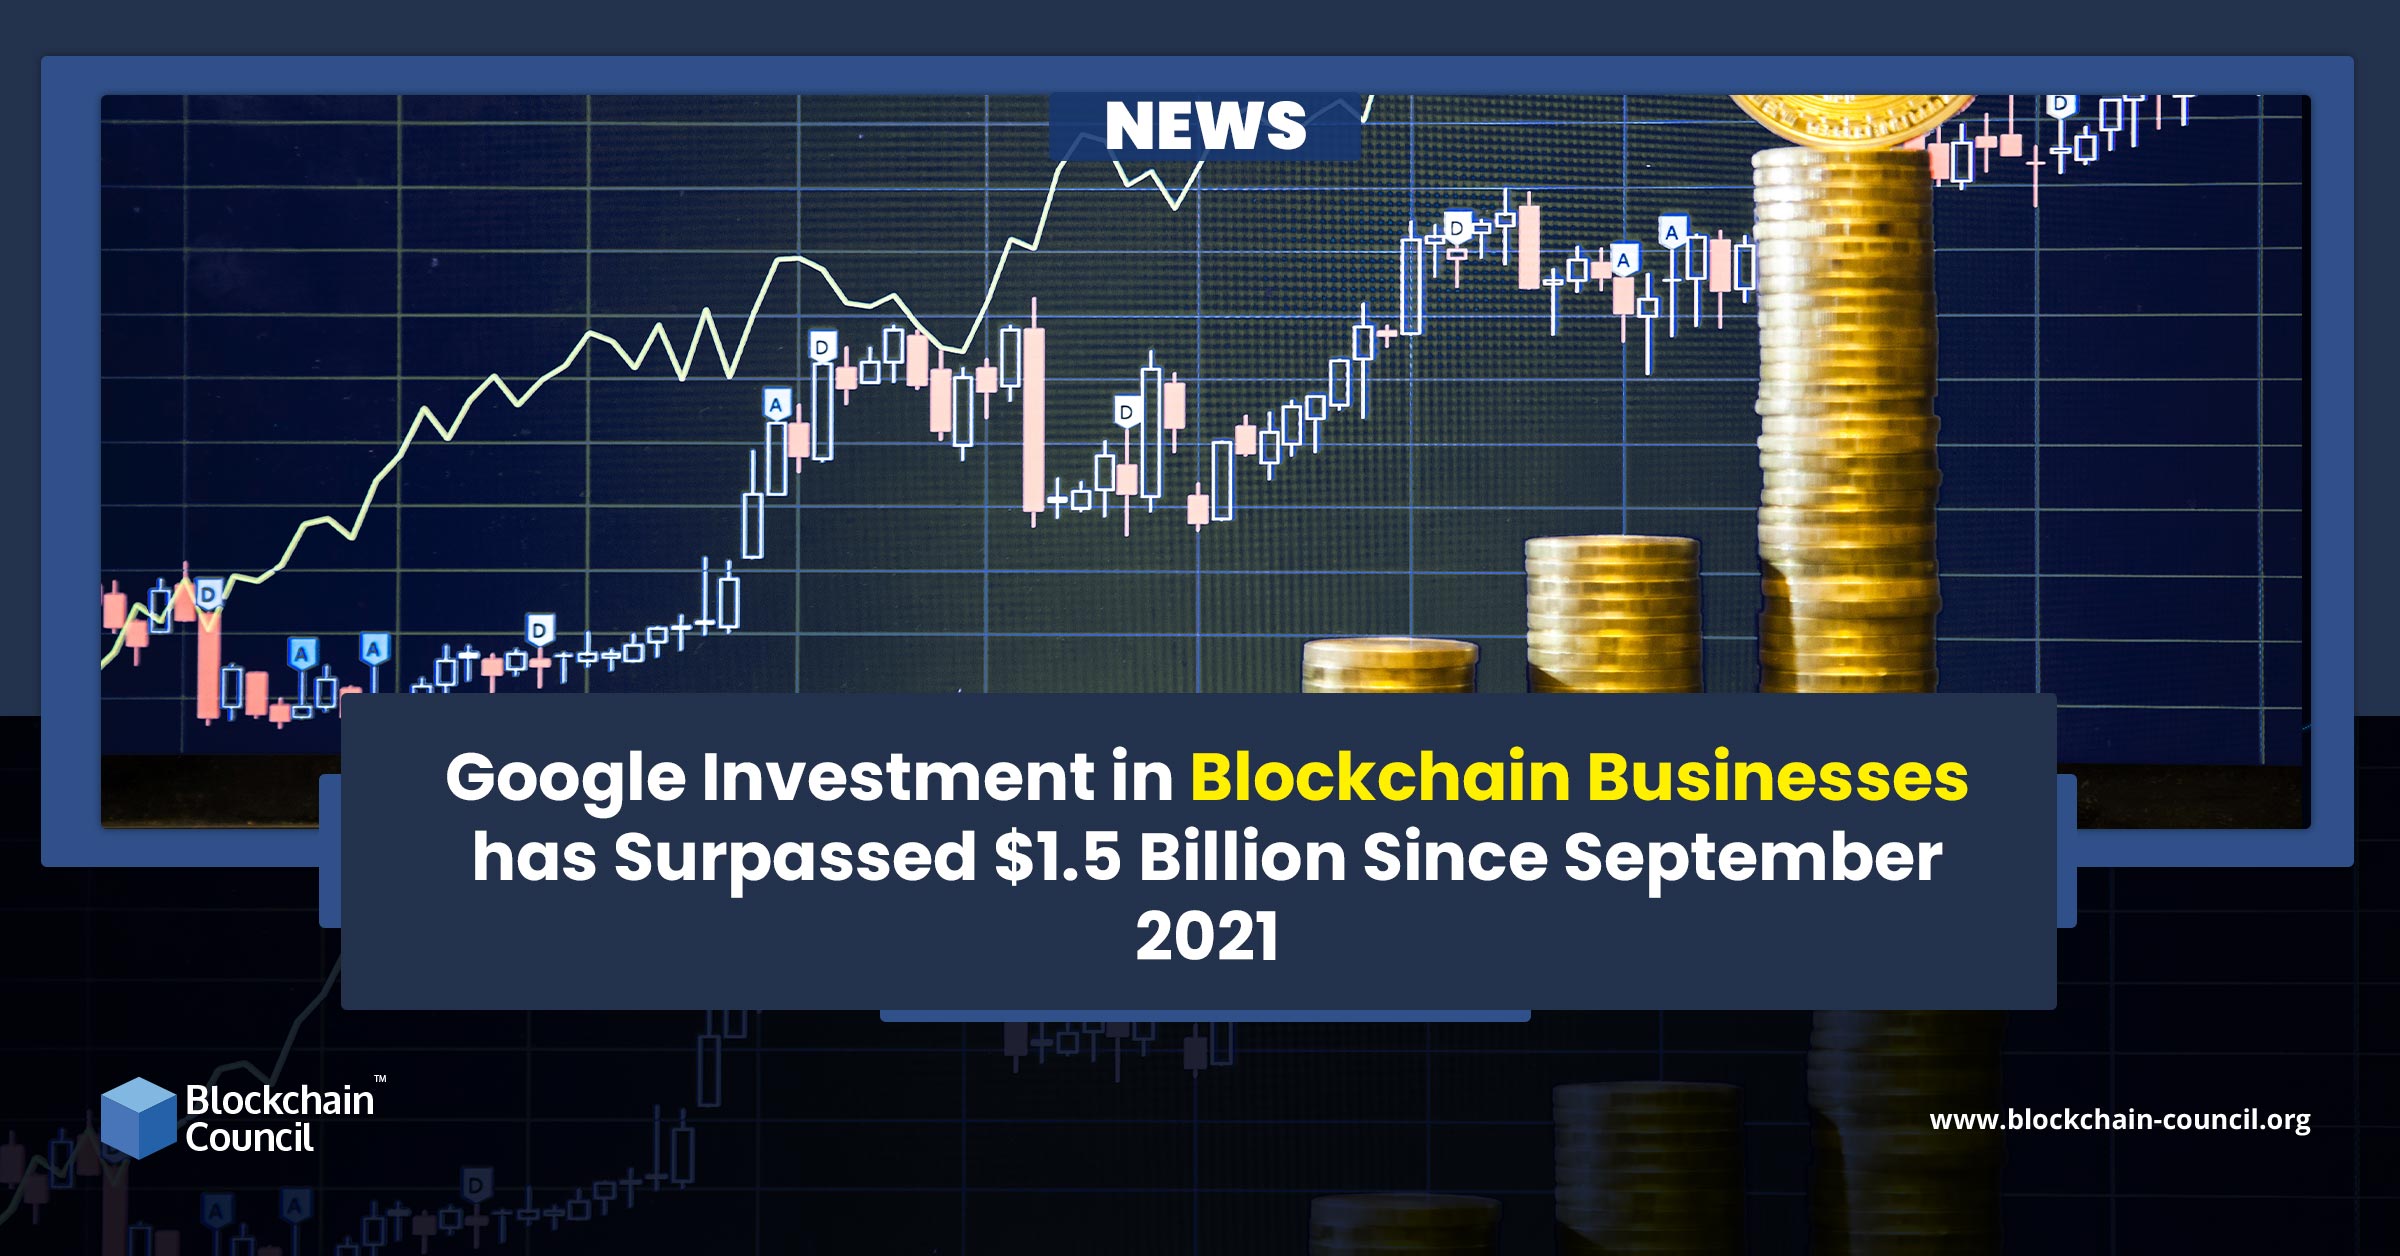 Google Investment in Blockchain Businesses has Surpassed $1.5 Billion Since September 2021